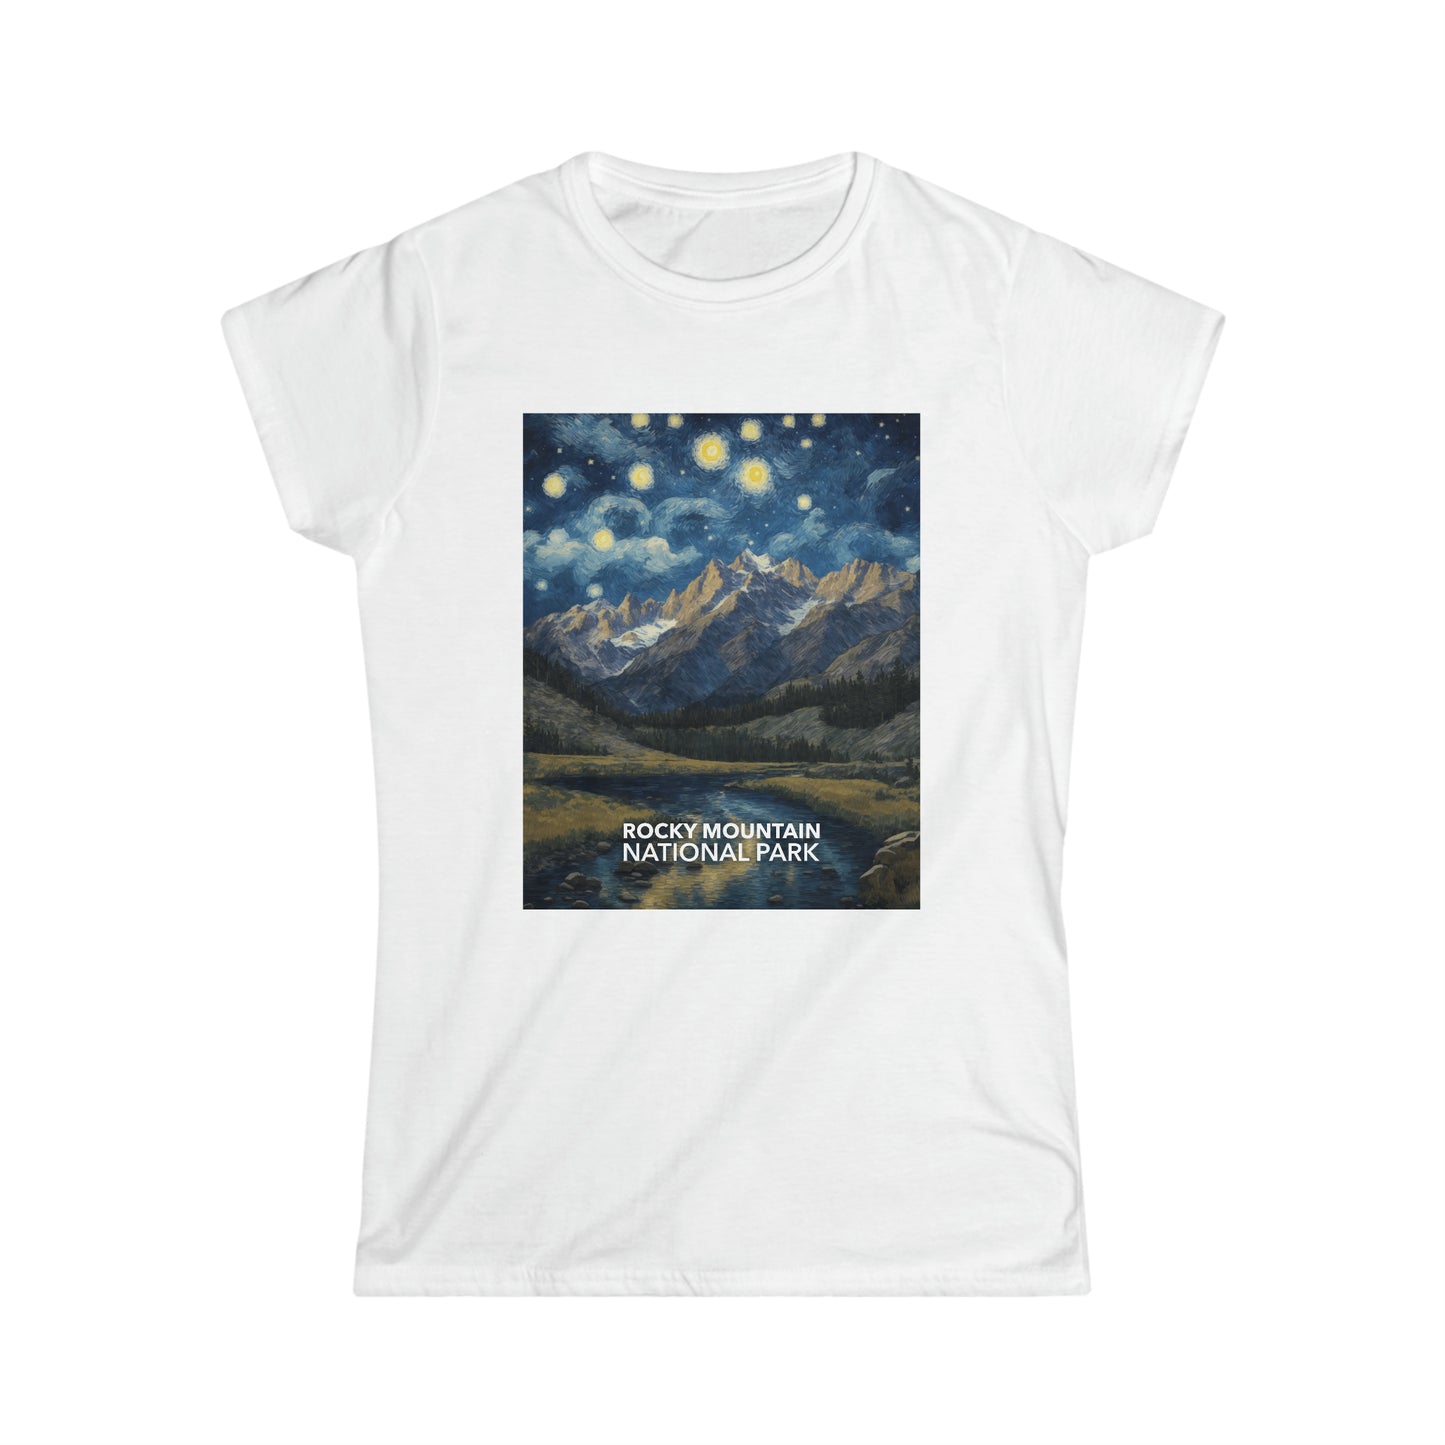 Rocky Mountain National Park T-Shirt - Women's Starry Night